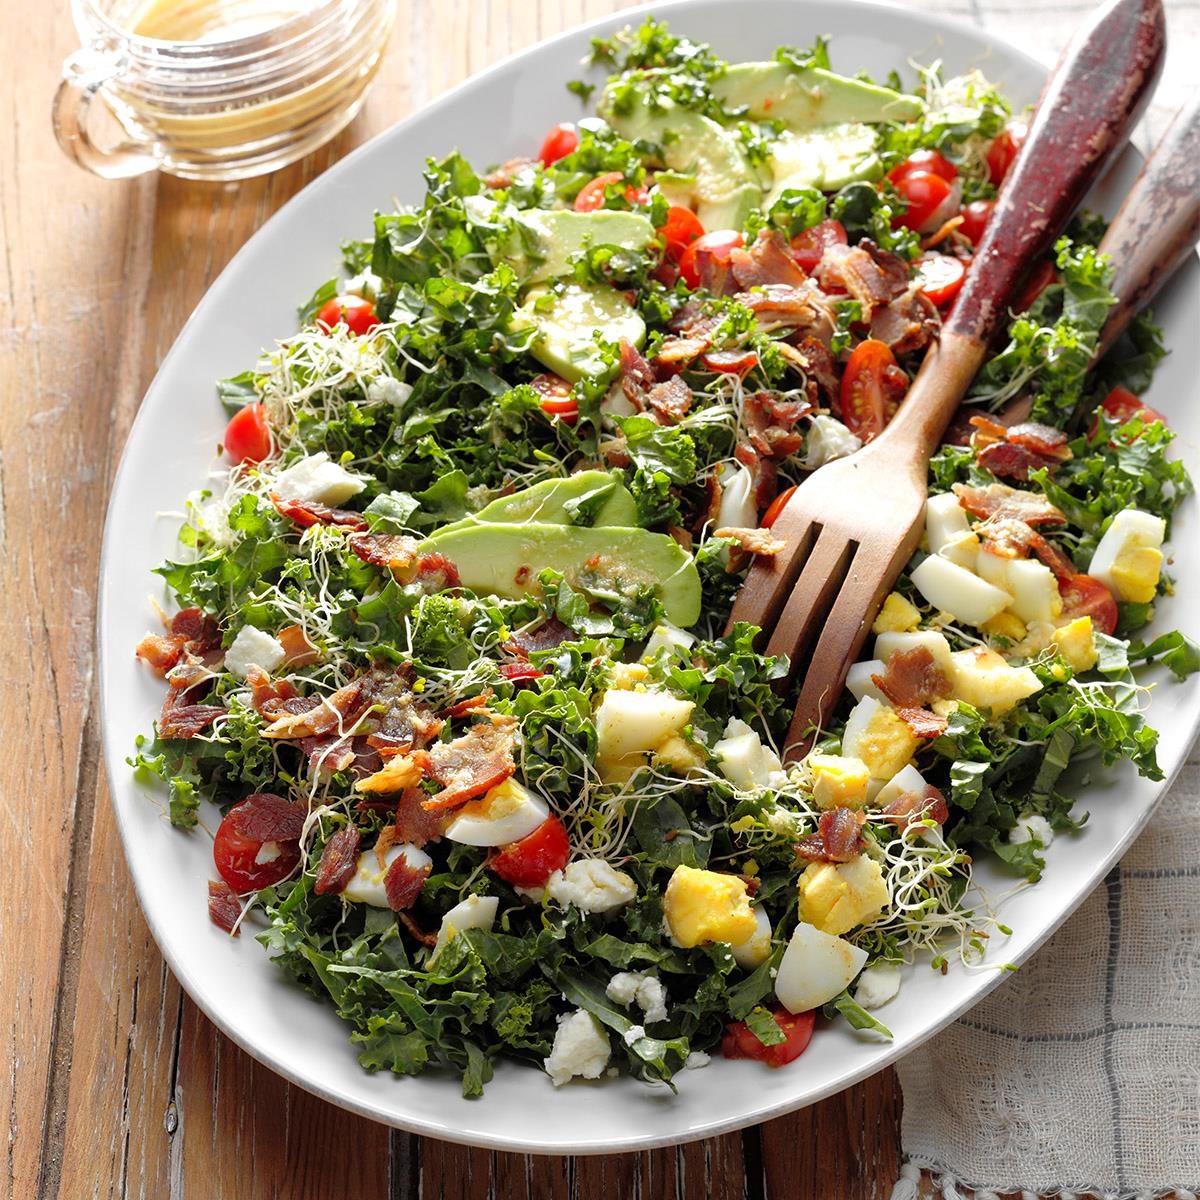 Kale Bacon Salad With Honey Horseradish Vinaigrette Exps Fttmz18 118032 B11 16 2b 8